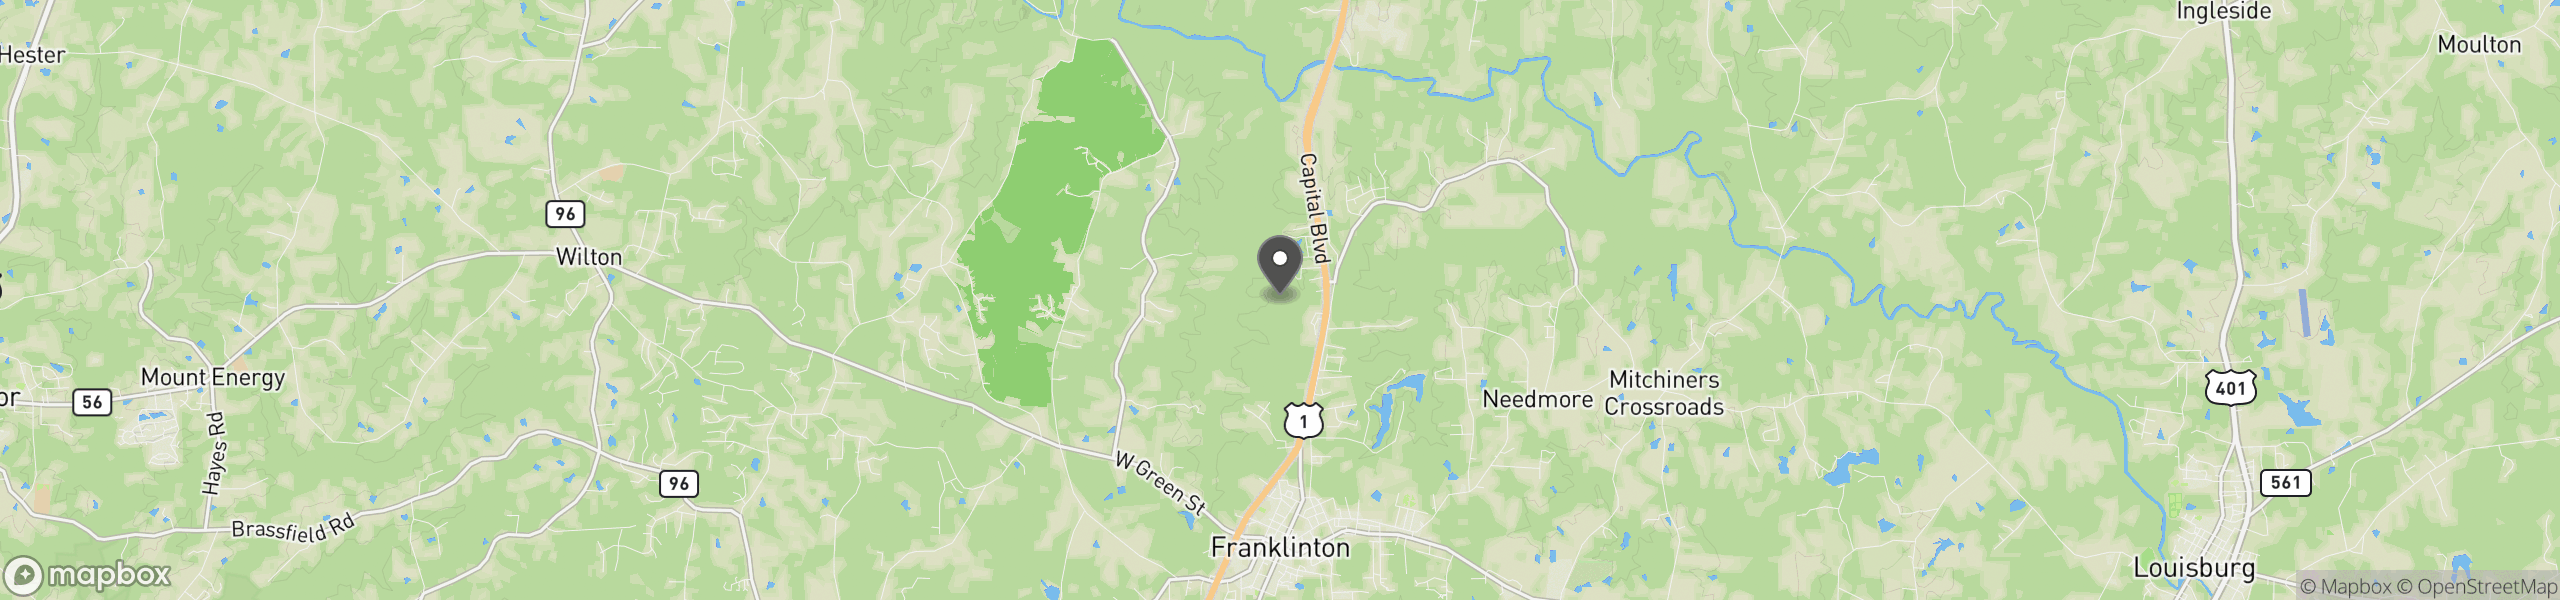 Franklinton, NC 27525